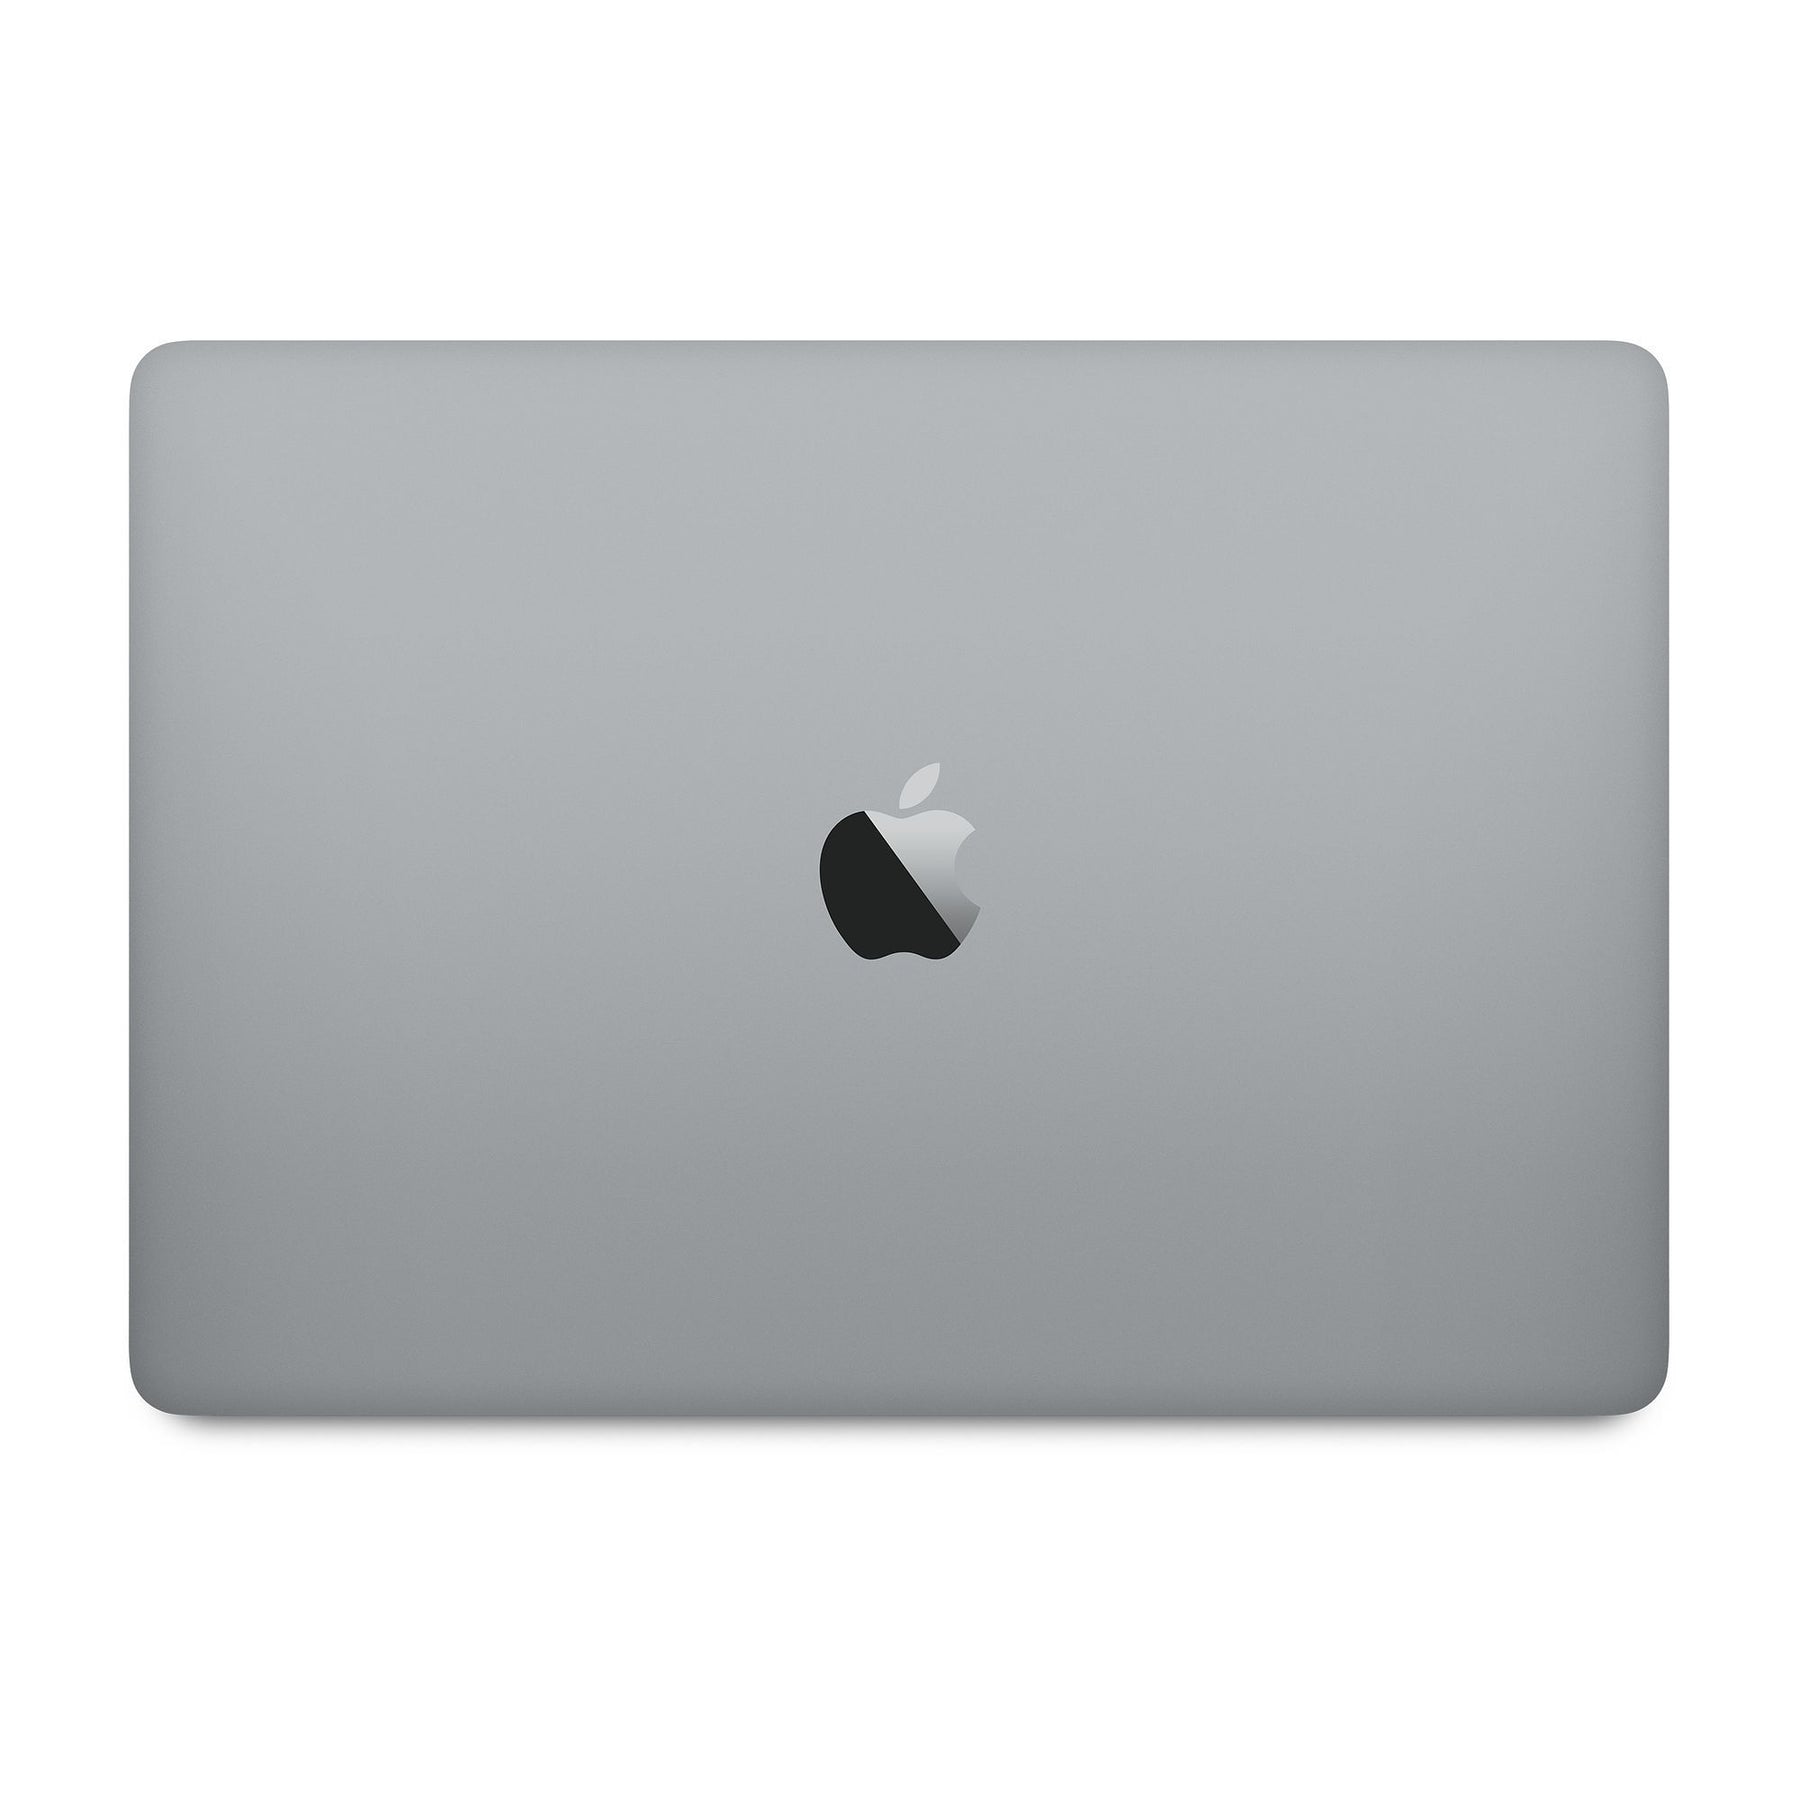 Macbook Pro 13-inch (Function Keys) - 2016 - i5 - Space Grey